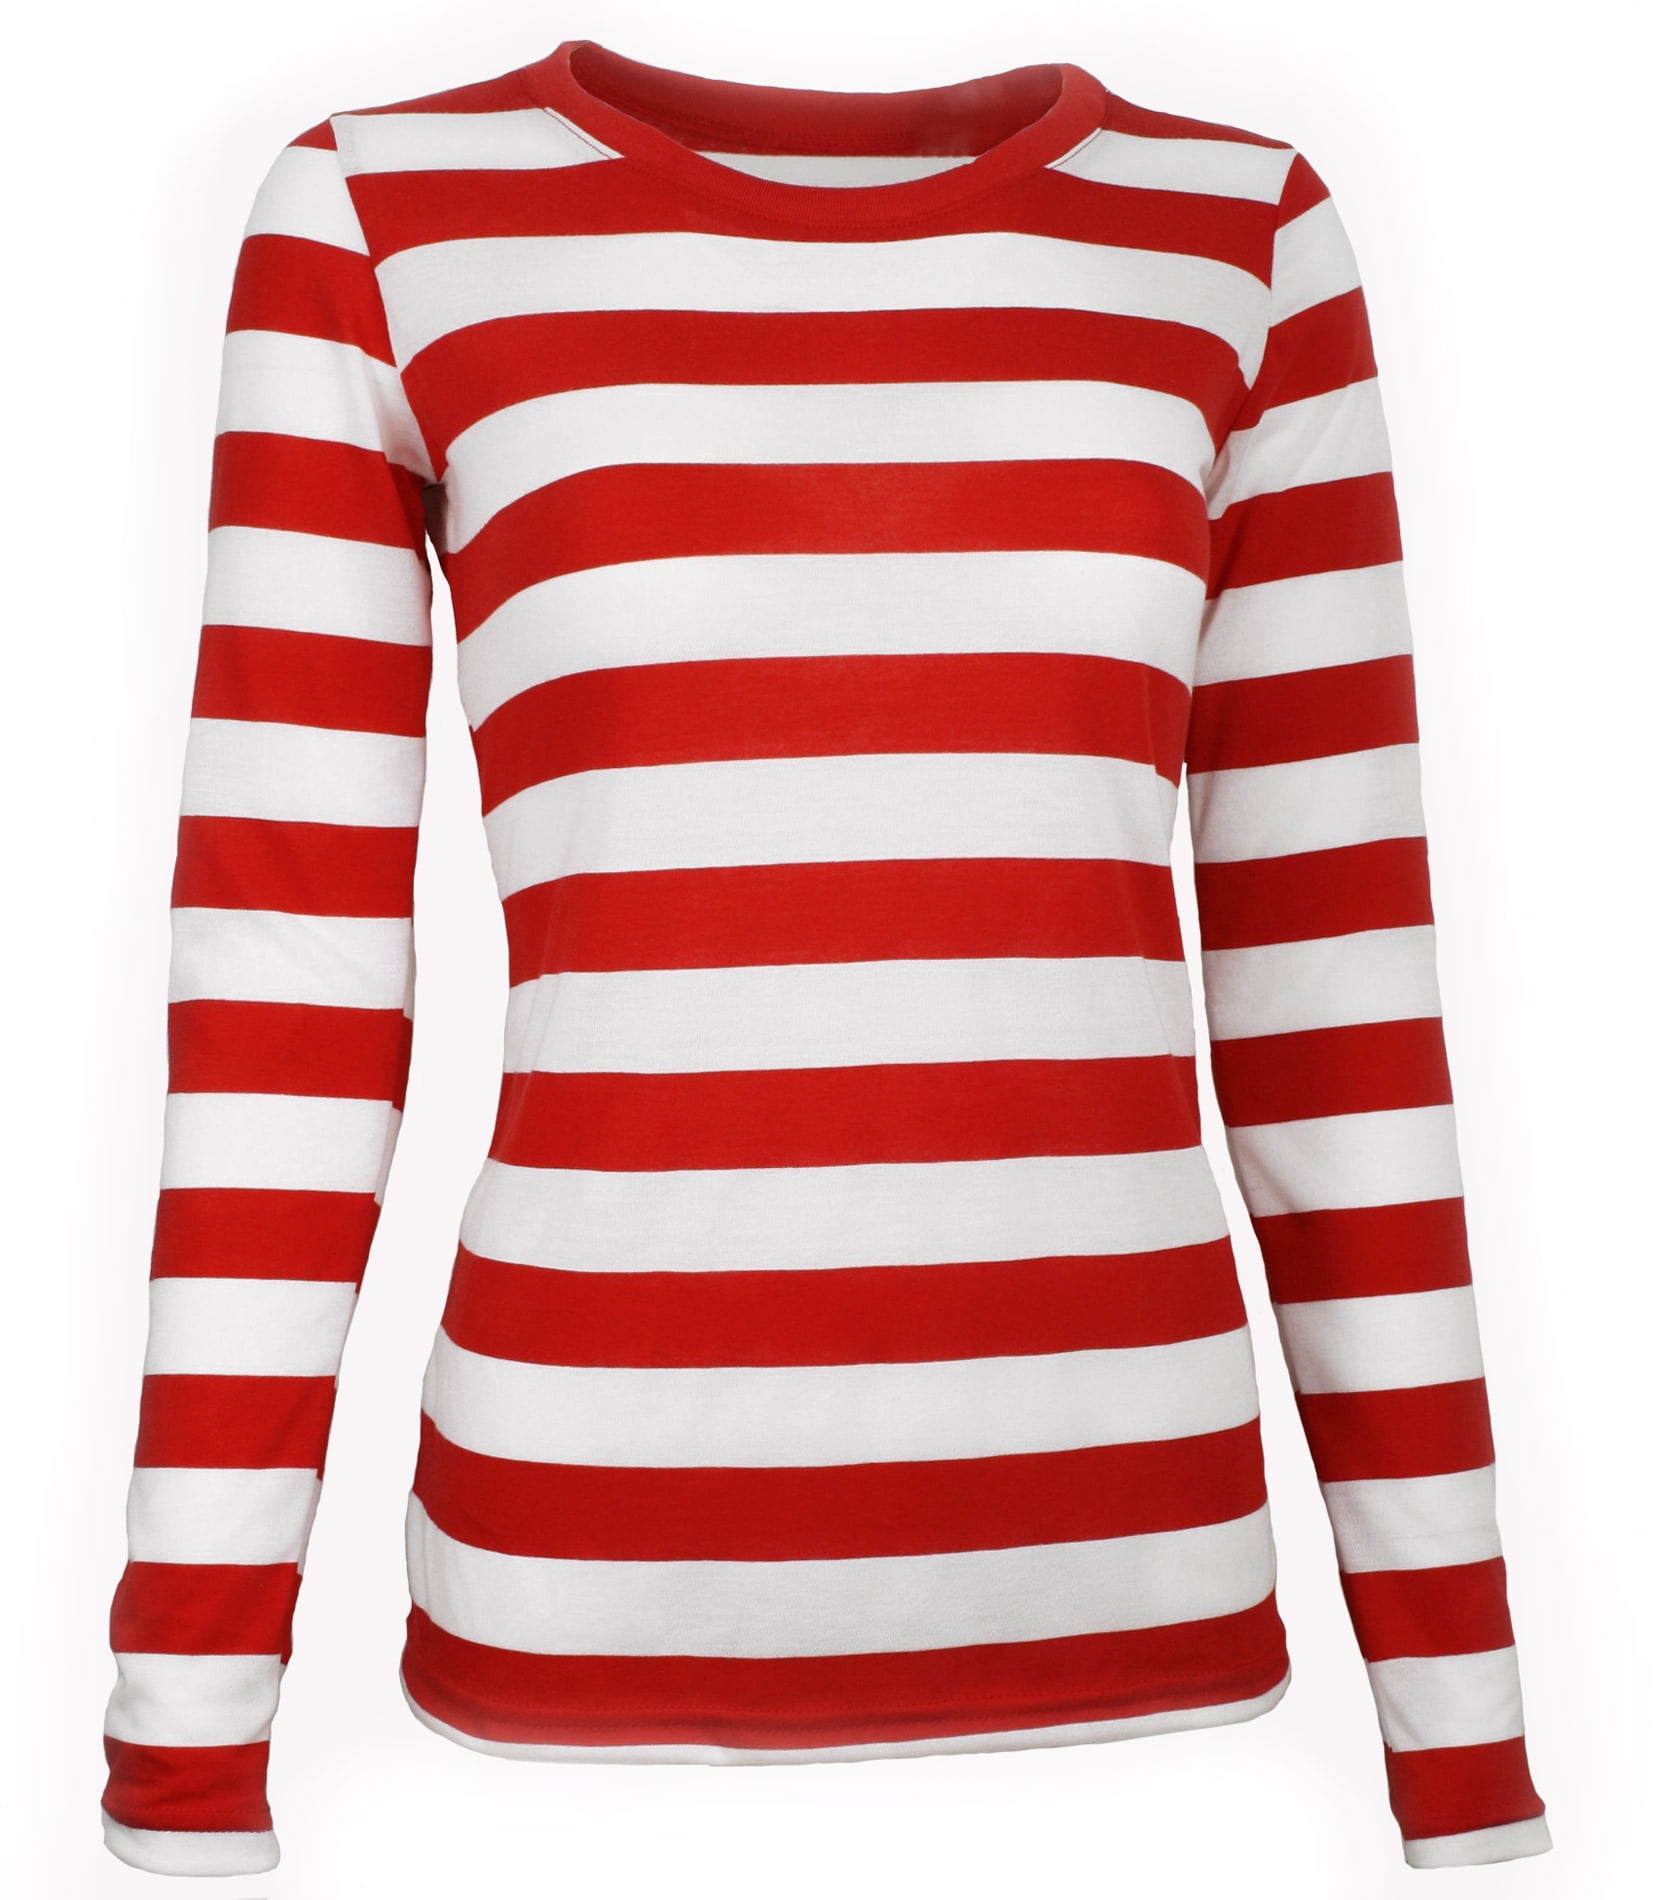 Long Sleeve Red White Striped Shirt Women's XXL - Walmart.com